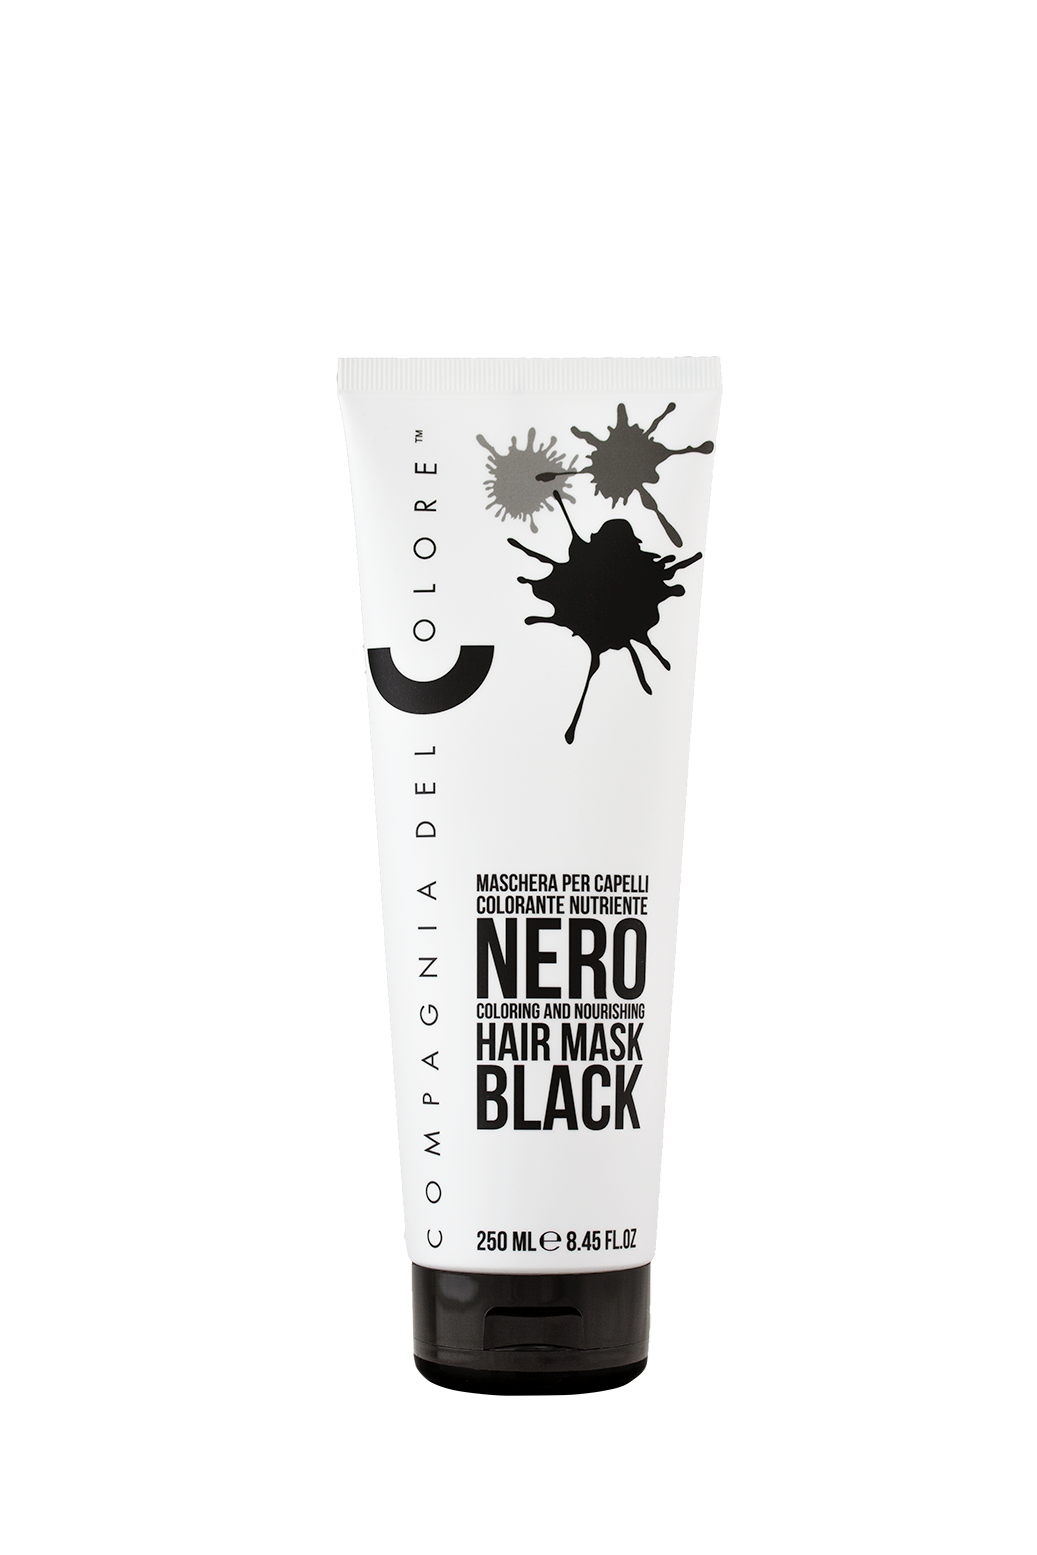 Nero Black